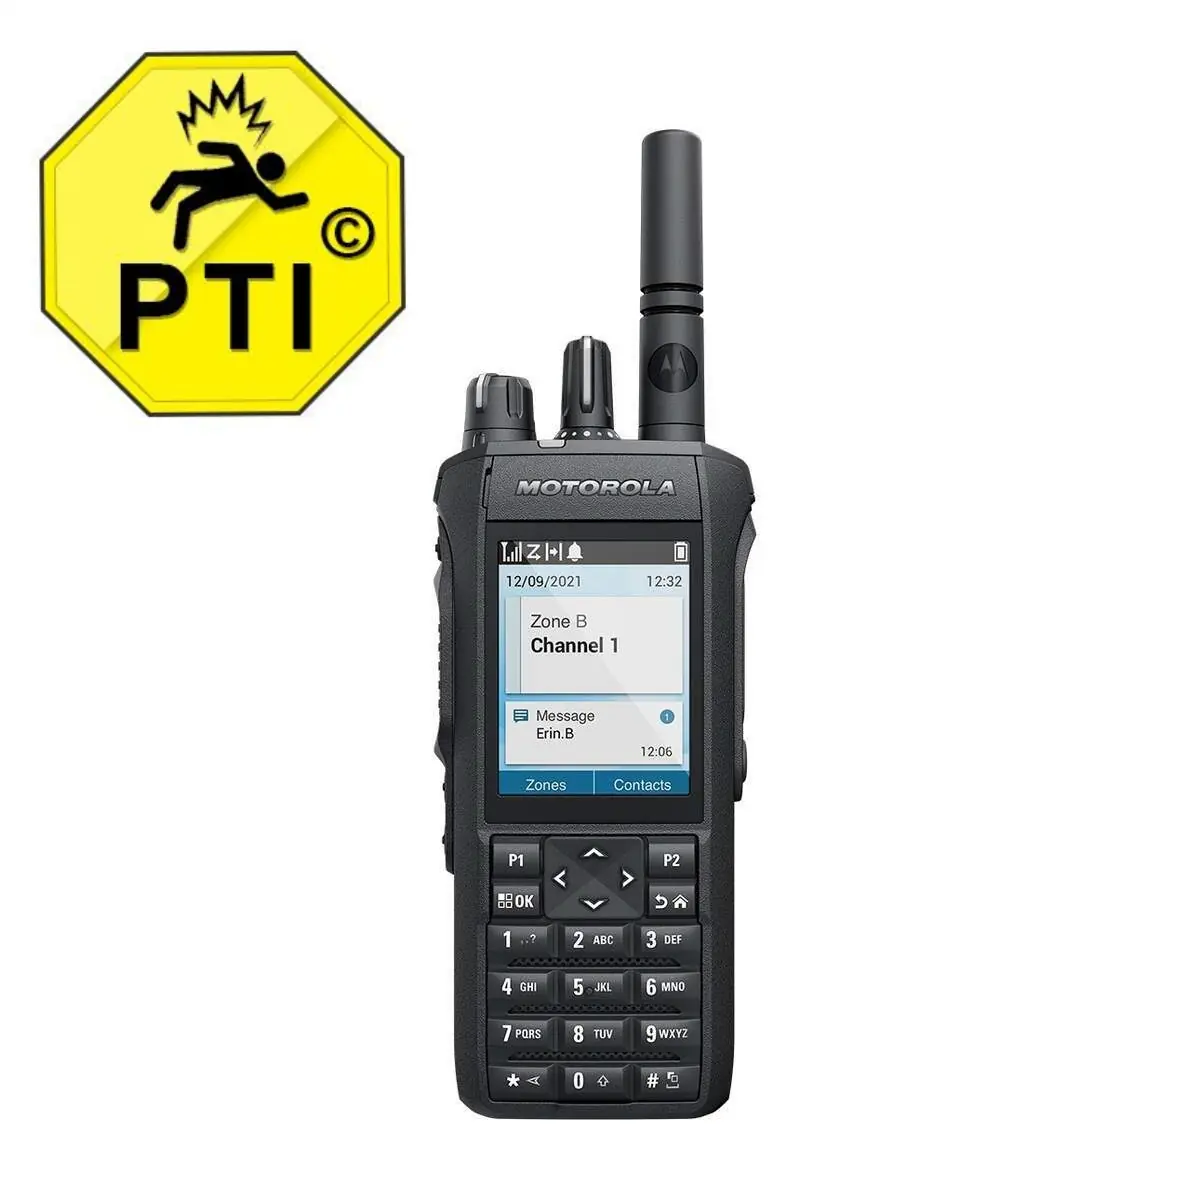 Motorola MOTOTRBO R7 CAPABLE - portofoon vergunningsplichtig digitaal, frequenties UHF